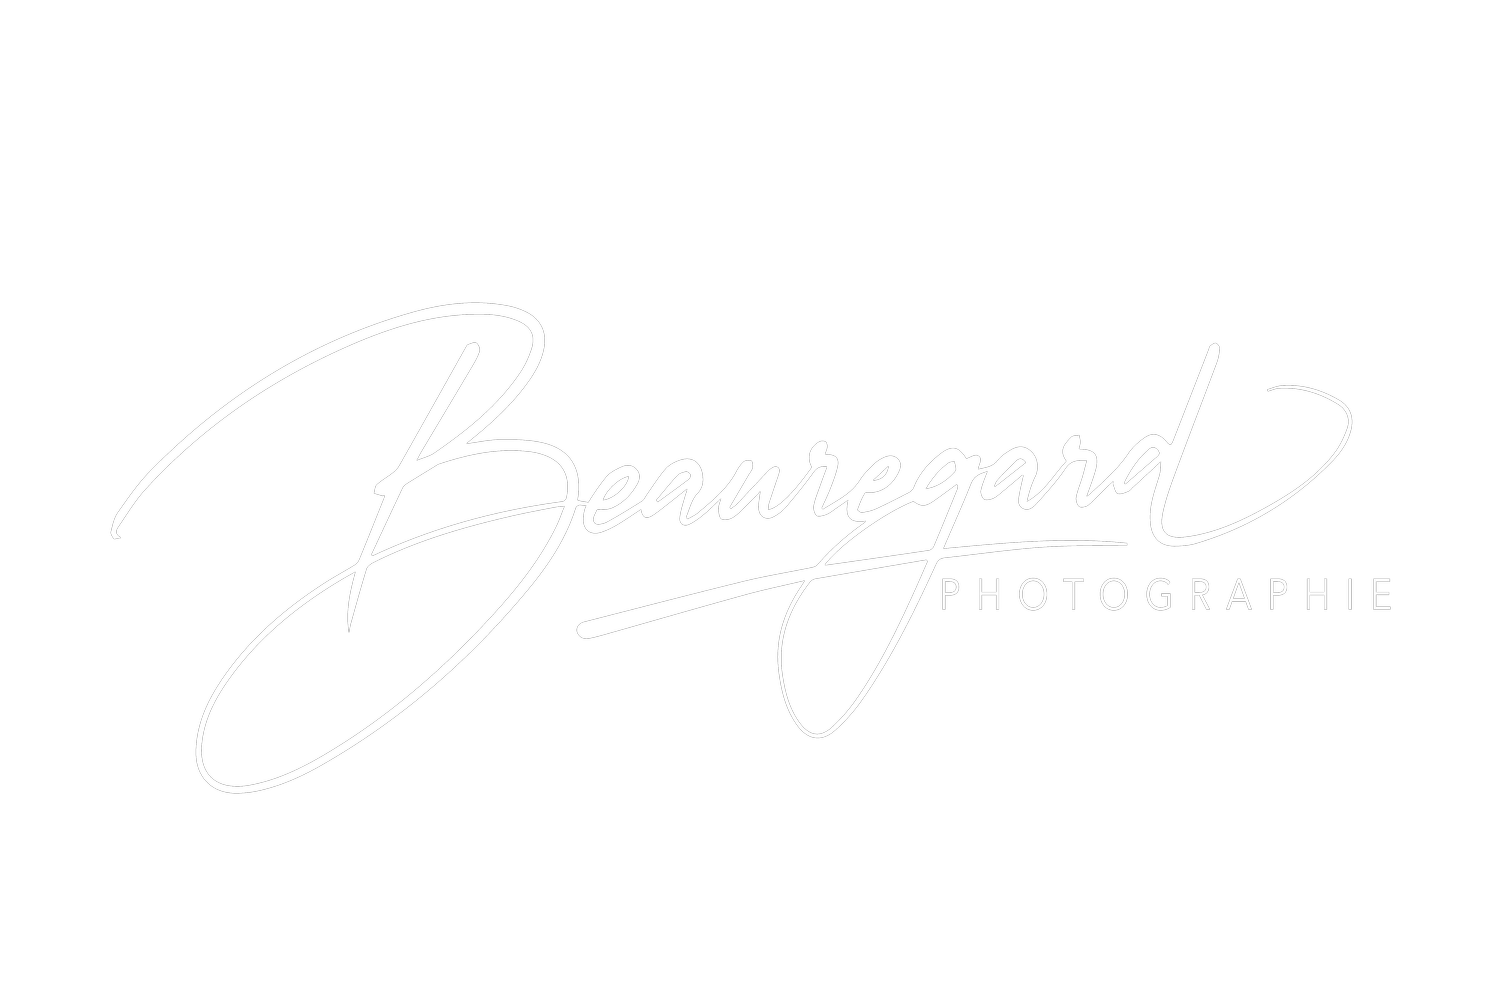 Beauregard Photographie